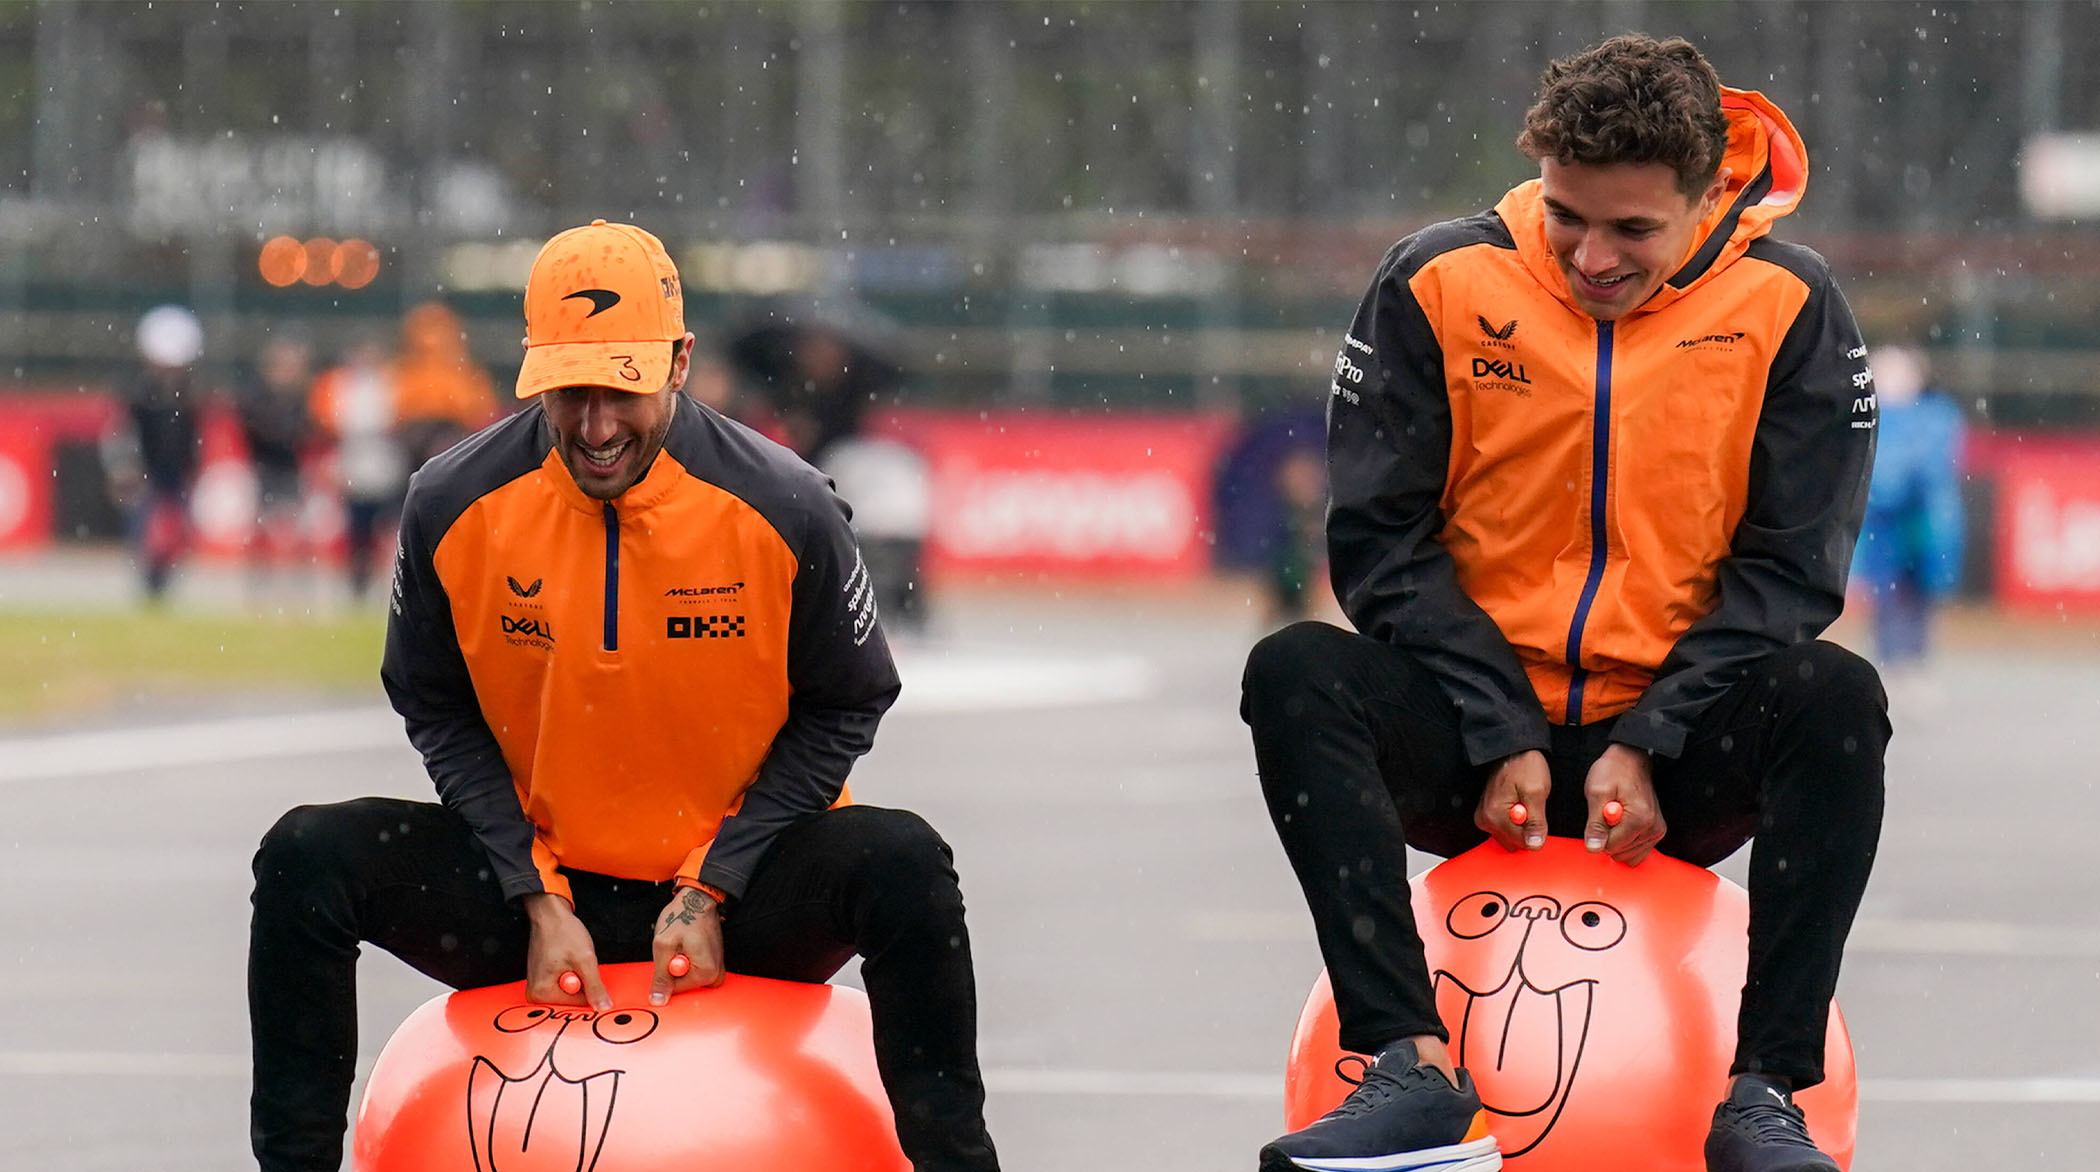 Lando Norris met fin aux rumeurs de rupture avec Daniel Ricciardo